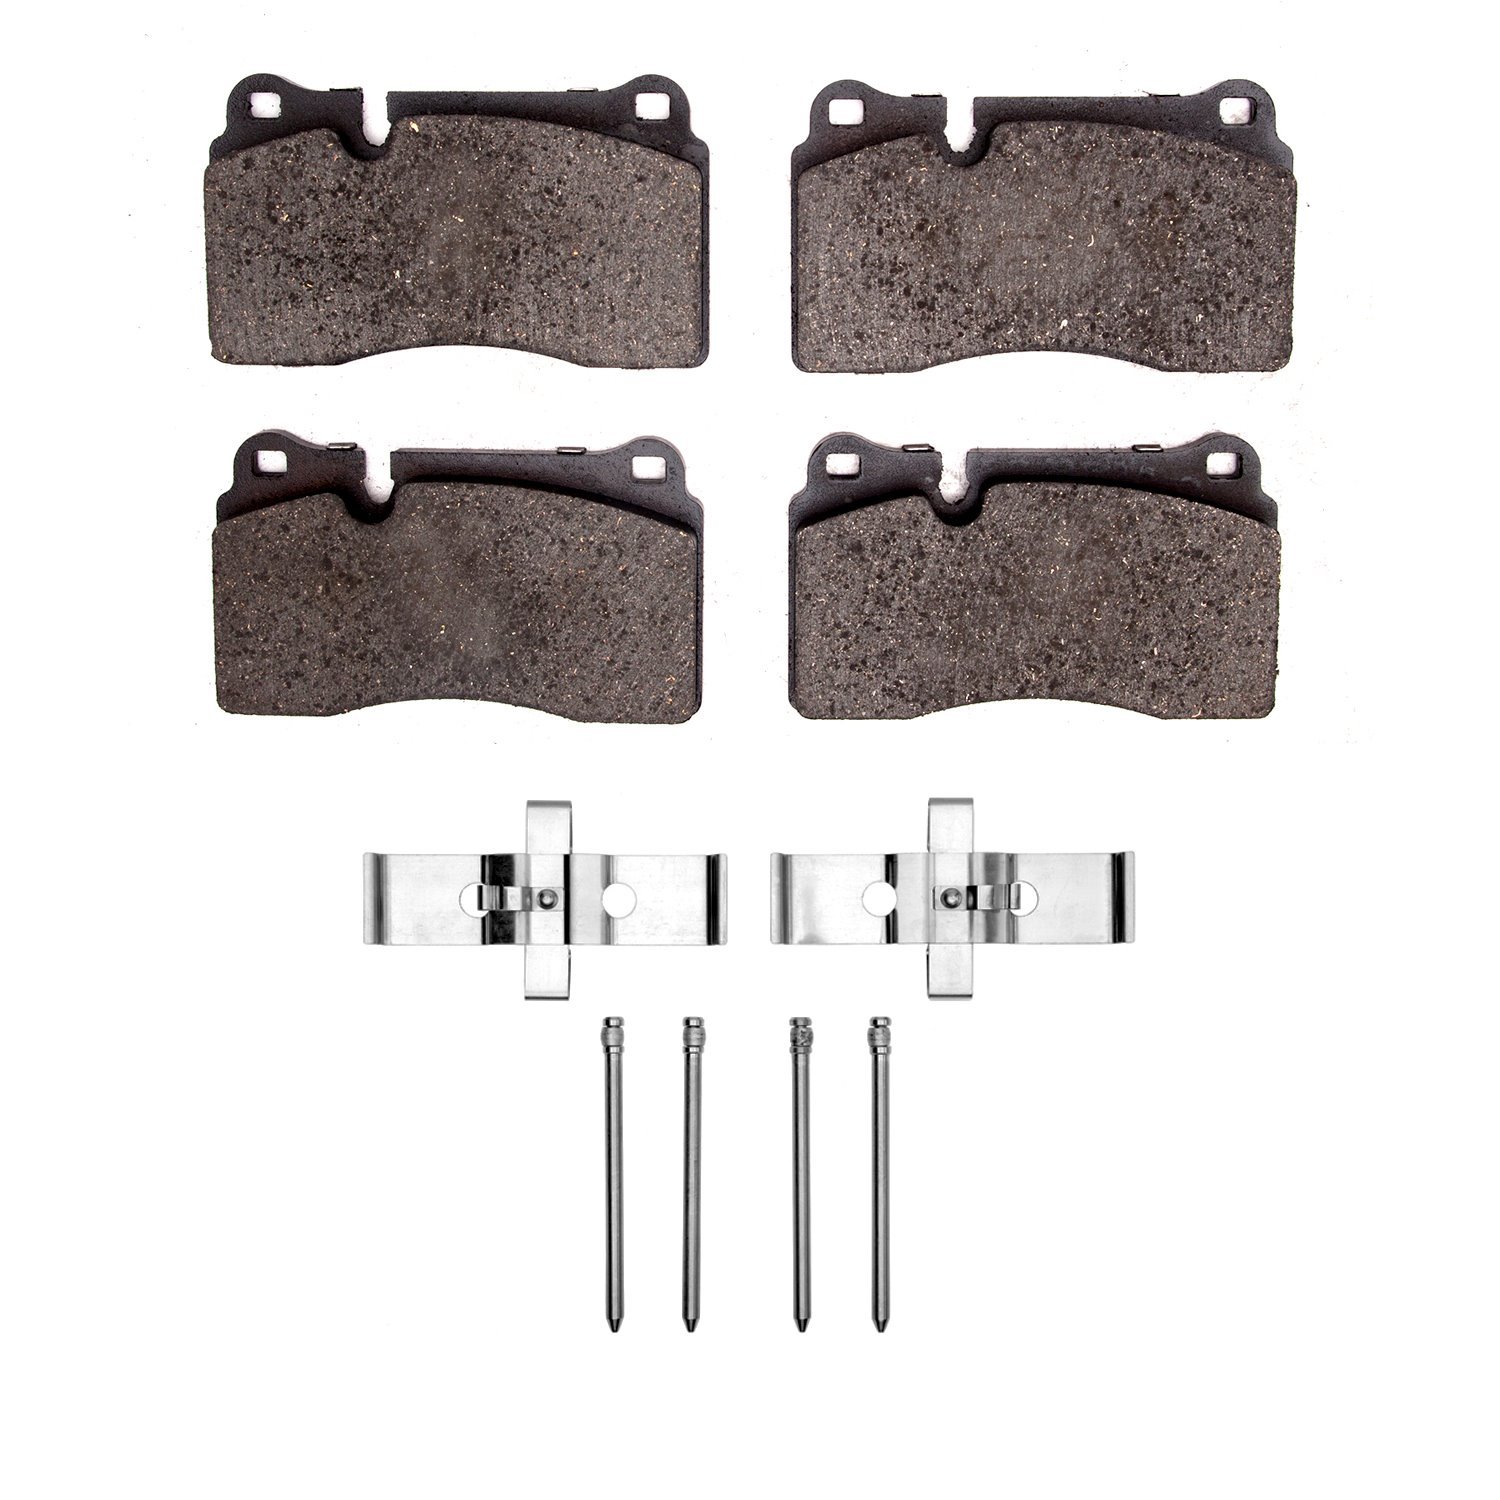 Euro Ceramic Brake Pads & Hardware Kit, 2006-2019 Fits Multiple Makes/Models, Position: Front & Rear